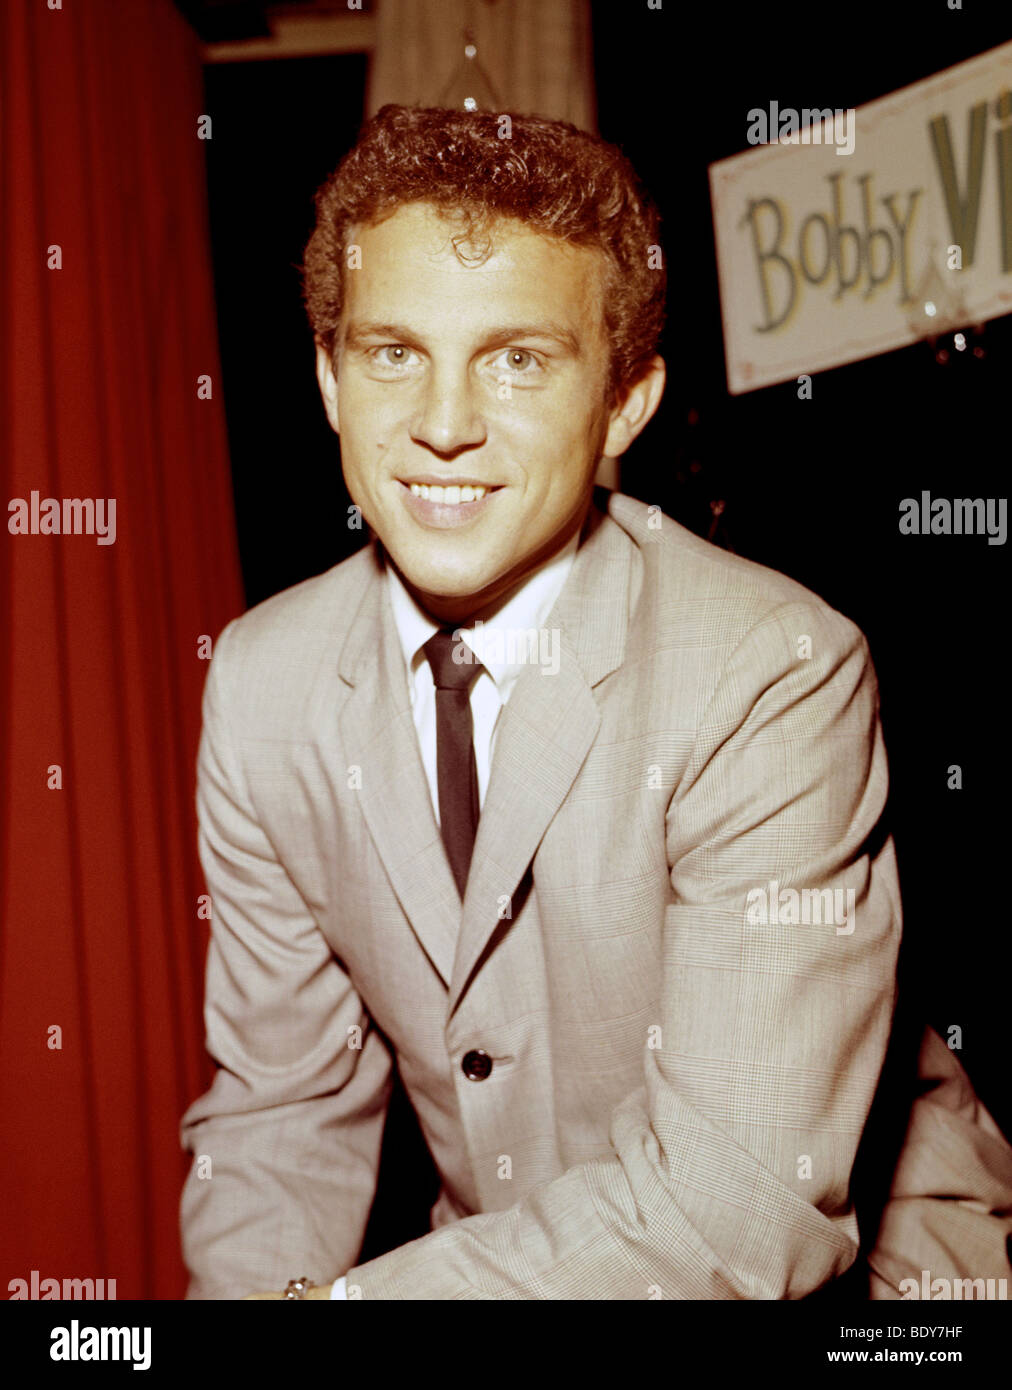 BOBBY VINTON - US cantante pop nel 1962 Foto Stock